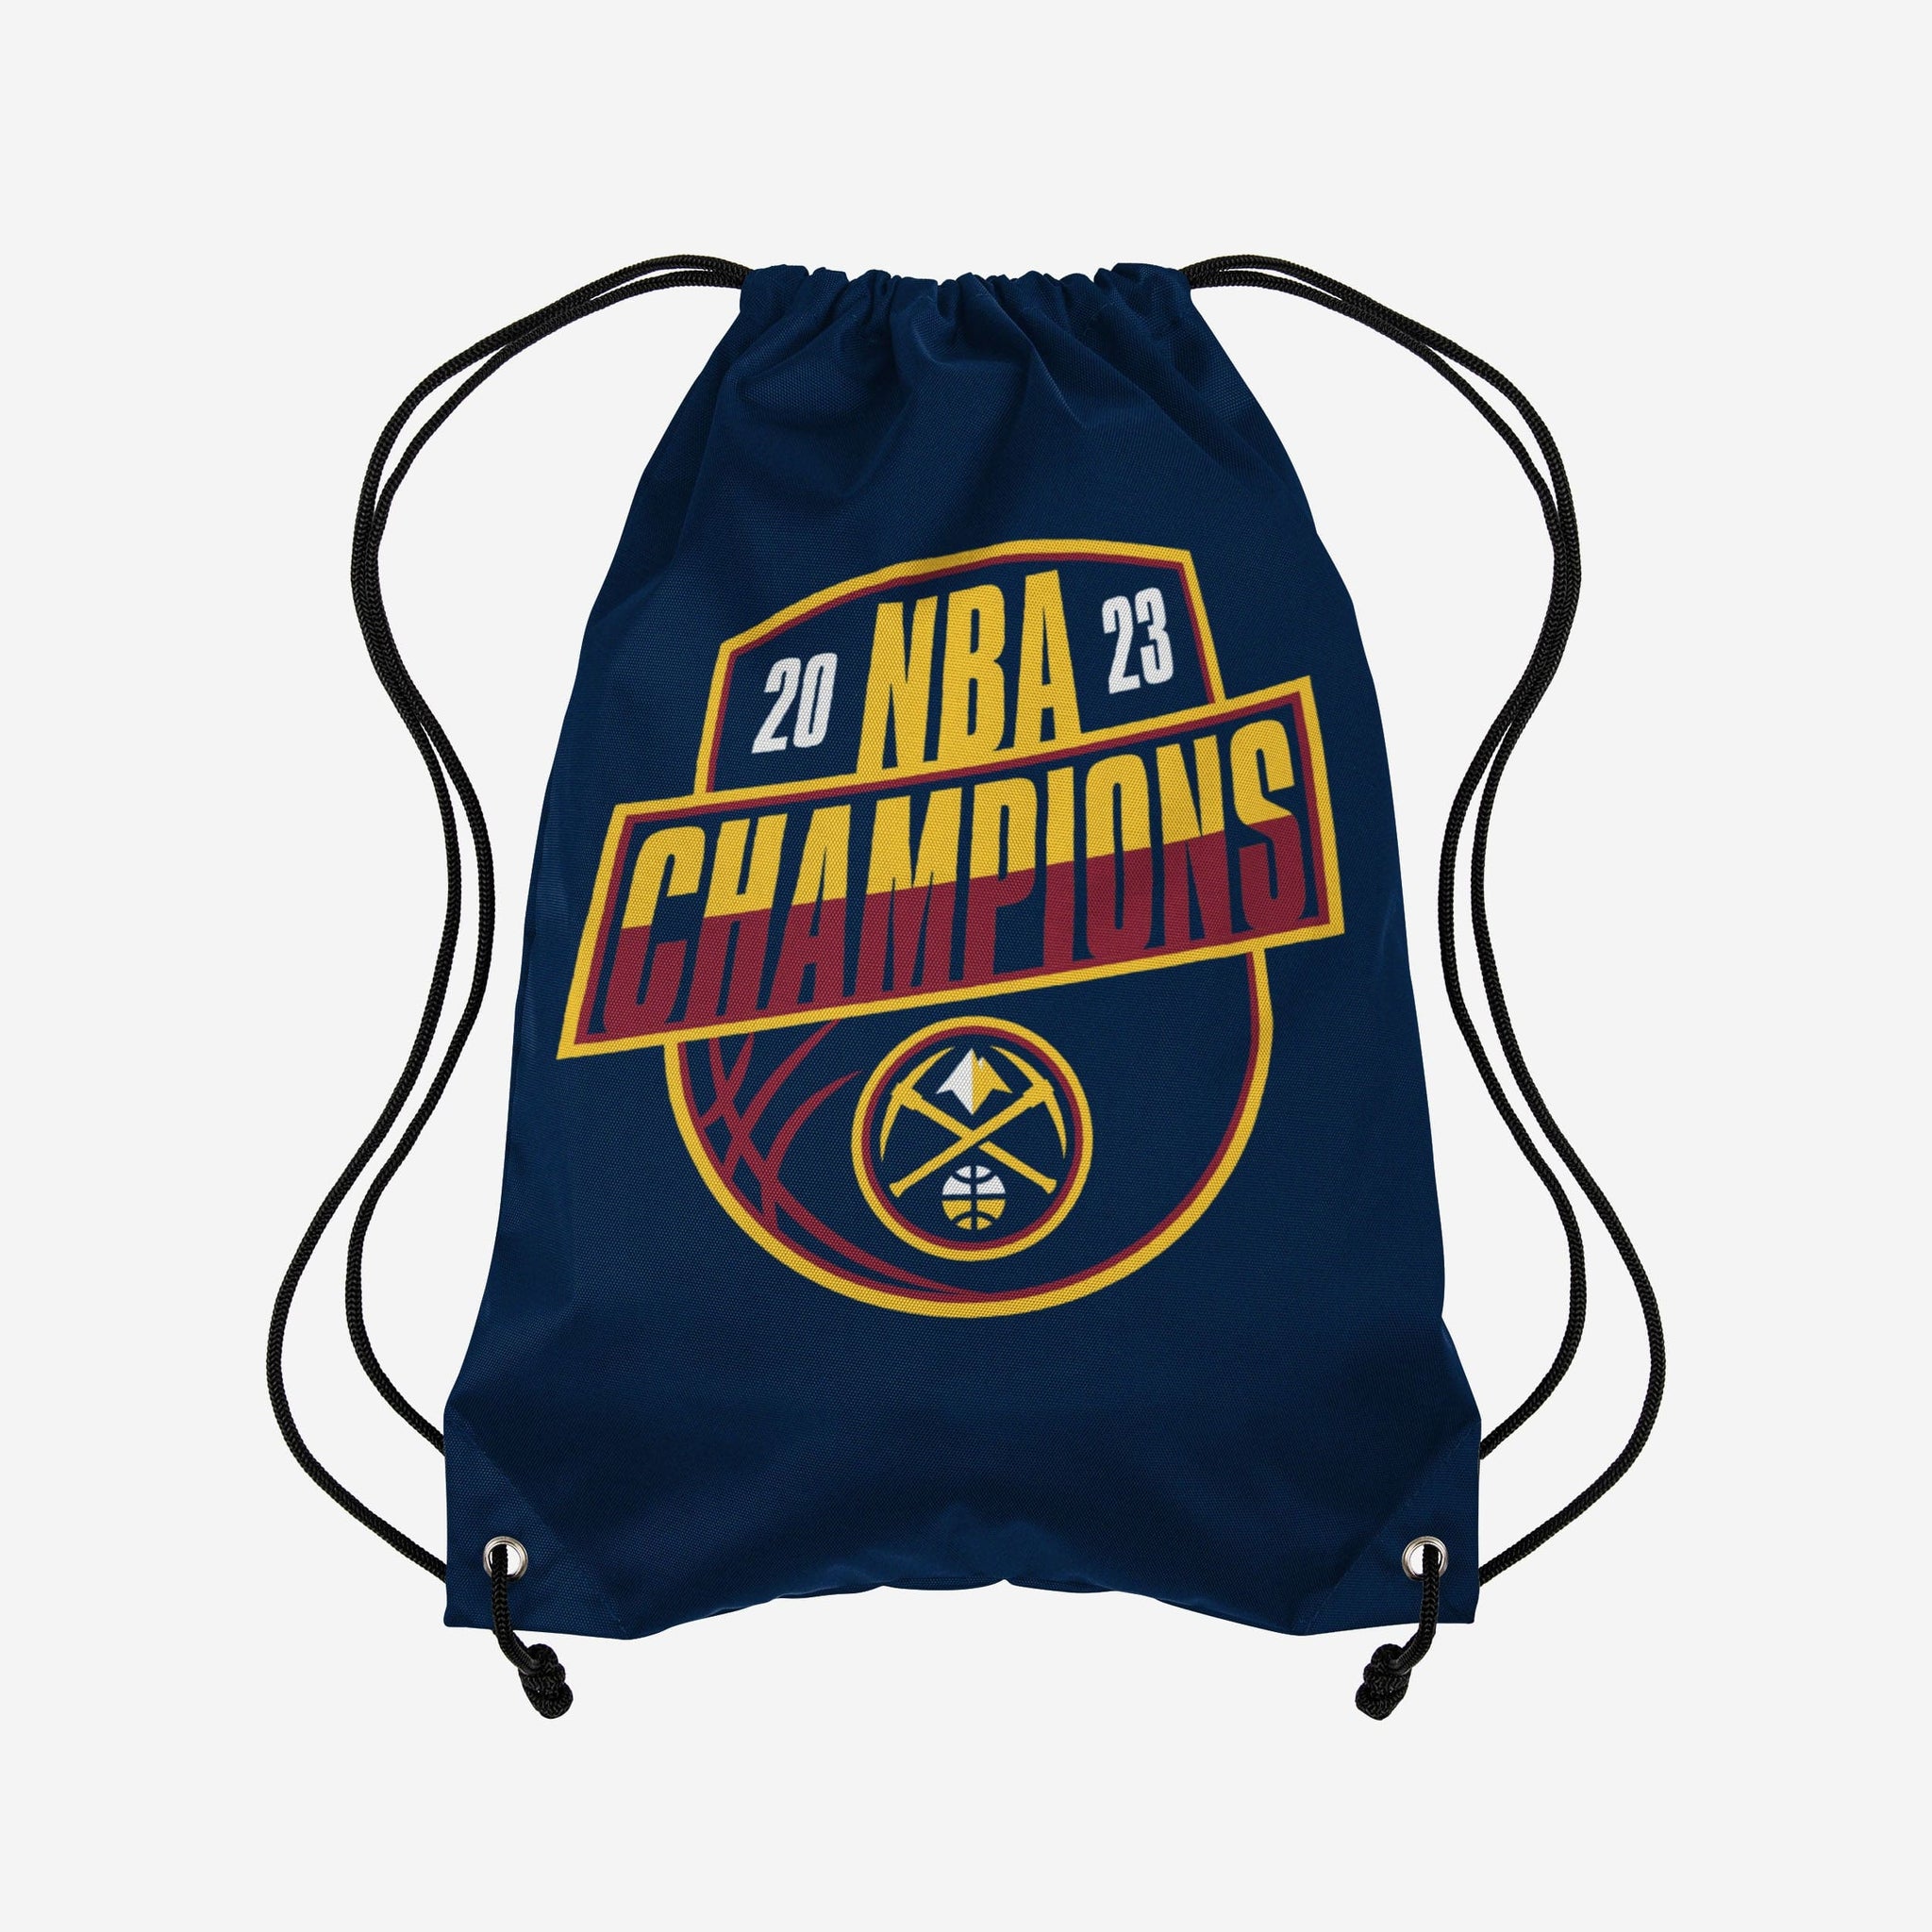 Denver Nuggets 2023 NBA Champions Action Backpack (PREORDER - SHIPS LA